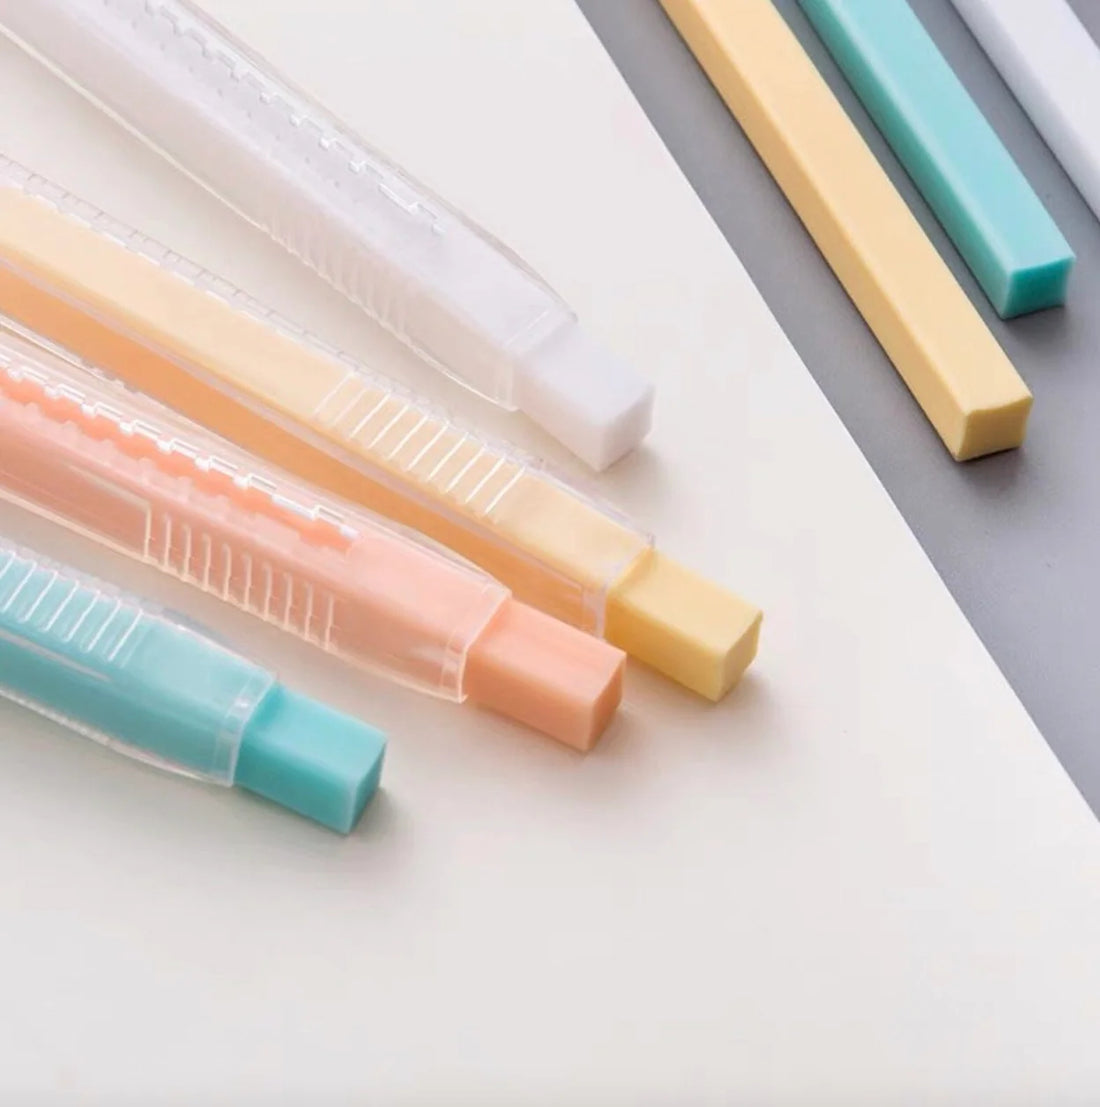 Kokuyo Pastel Cookie Retractable Erasers WSG-ERCP1T White